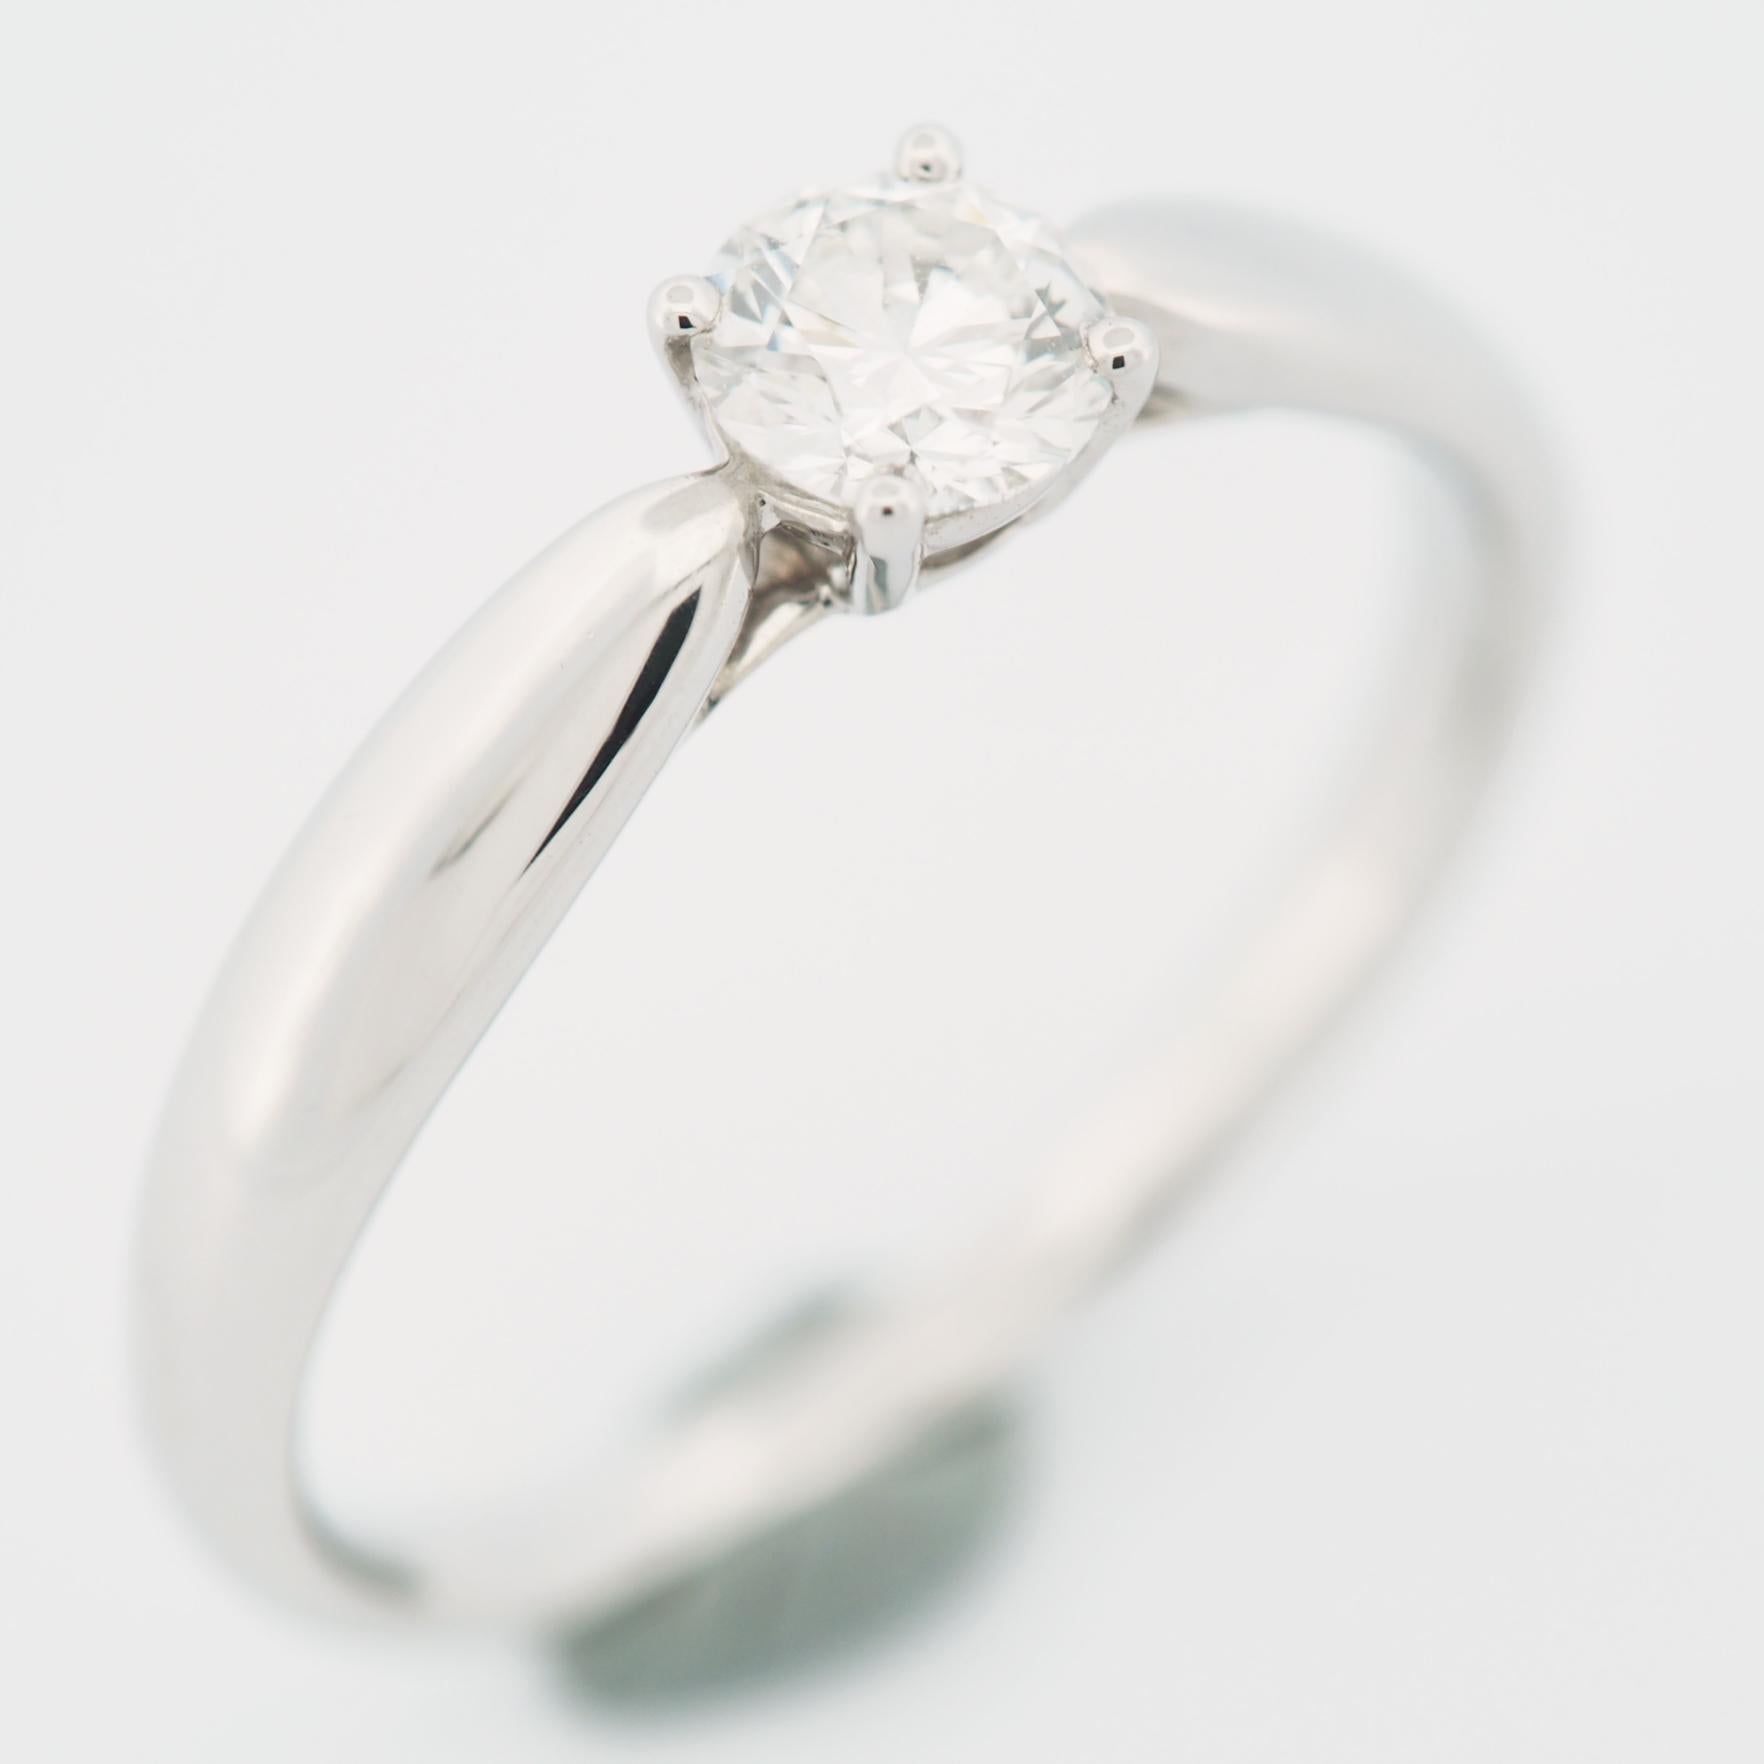 Item: Tiffany Harmony Solitaire Diamond Ring 
Stones: Diamond / 0.32ct
Color: G
Clarity:VS1
Polish: Excellent
Symmetry: Excellent
Fluorescence: None
Metal: Platinum 950
Ring Size: US SIZE 5.5 UK SIZE K 1/4
Internal Diameter: 16.15 mm
Measurements: